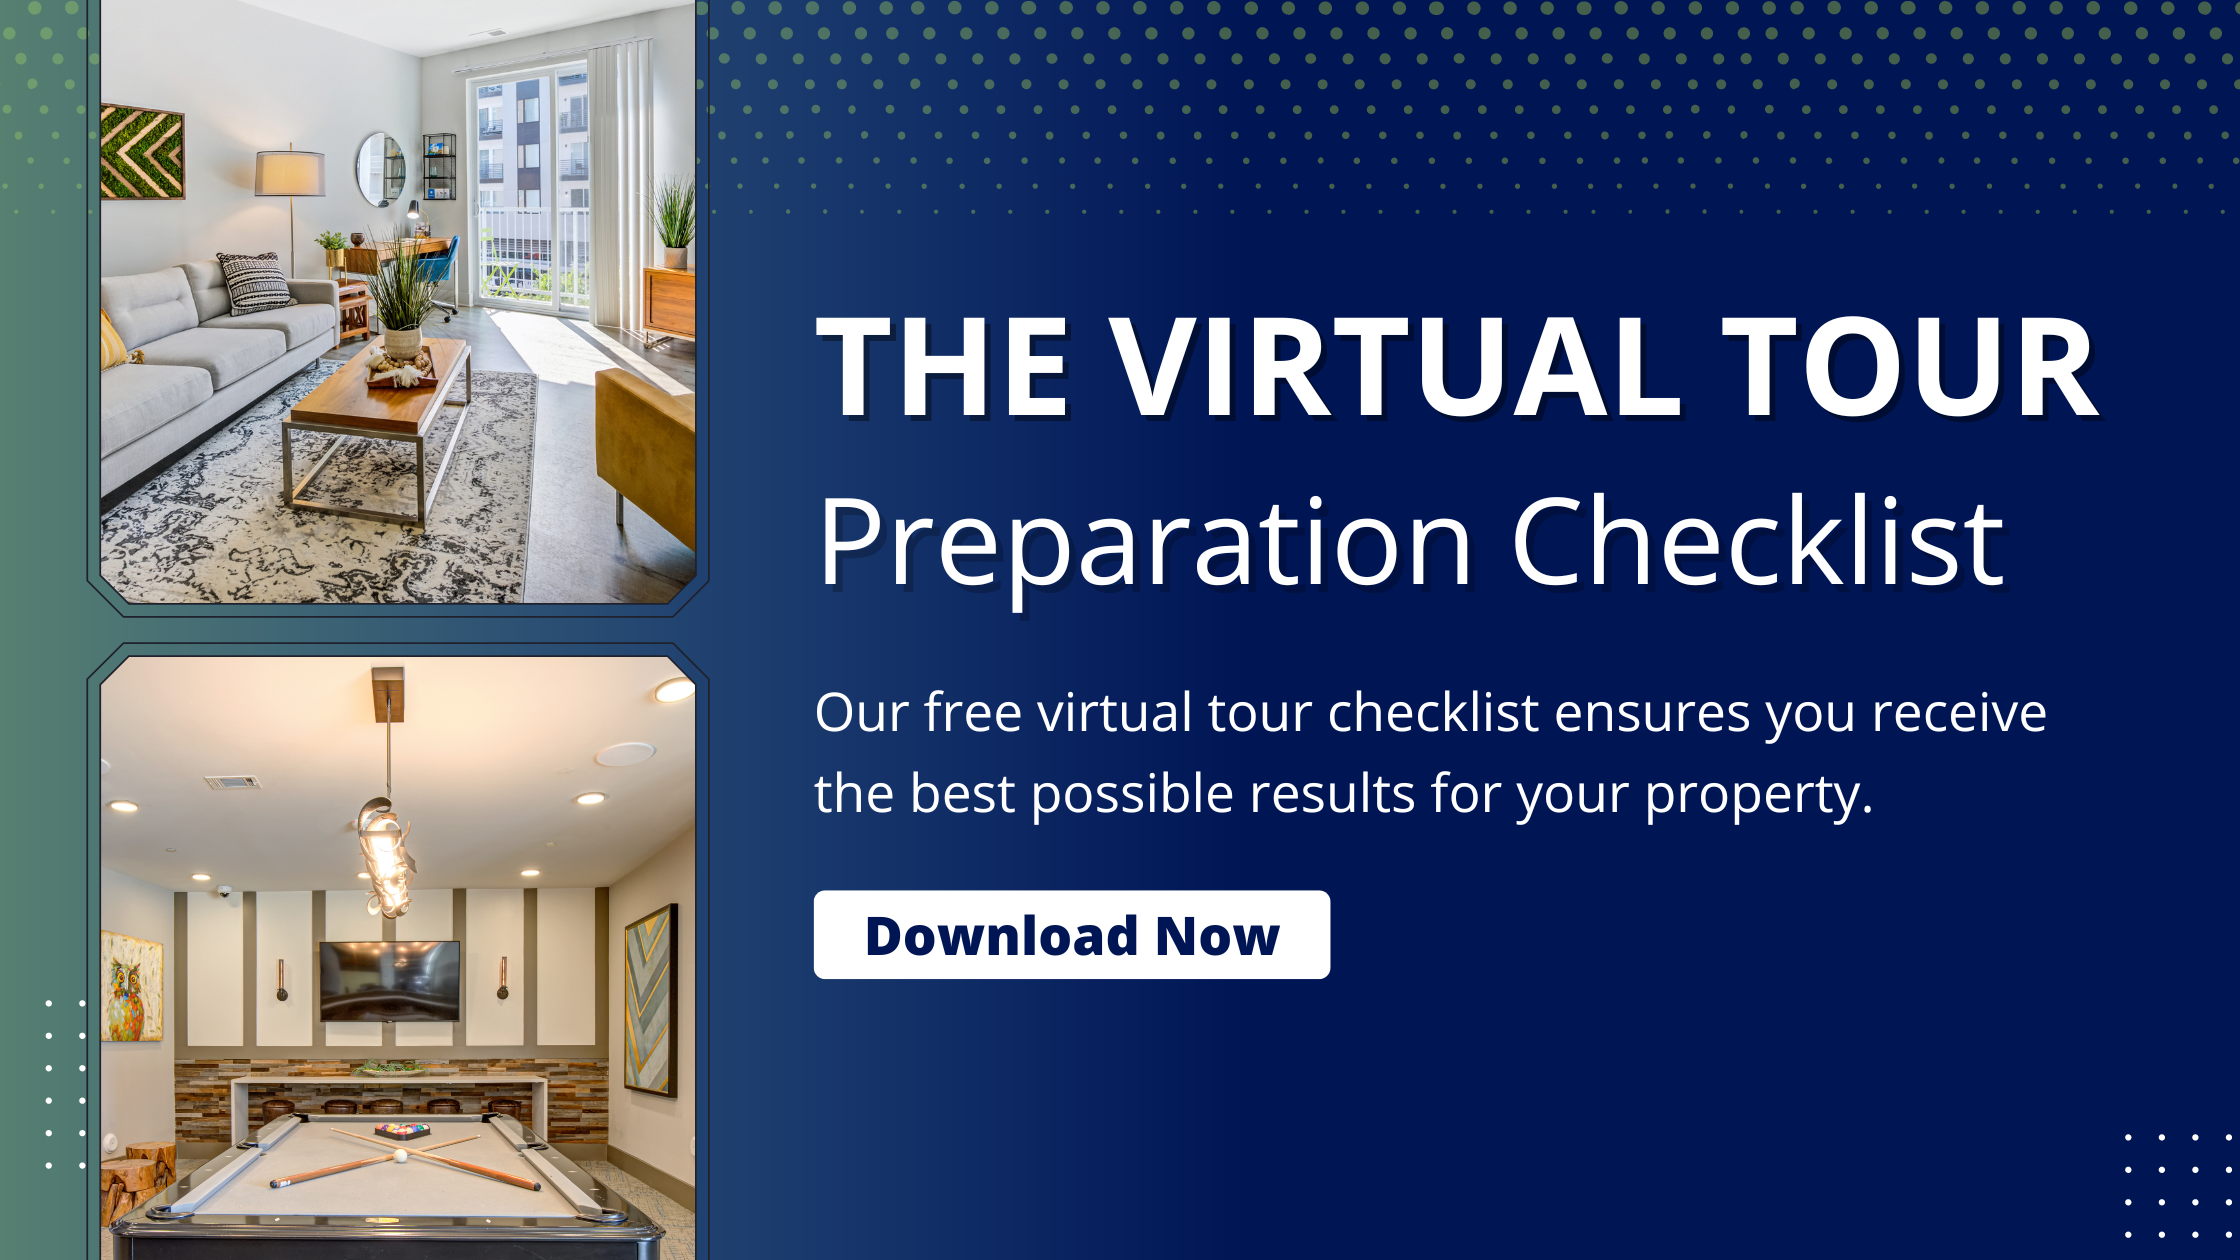 The Virtual Tour Preparation Checklist